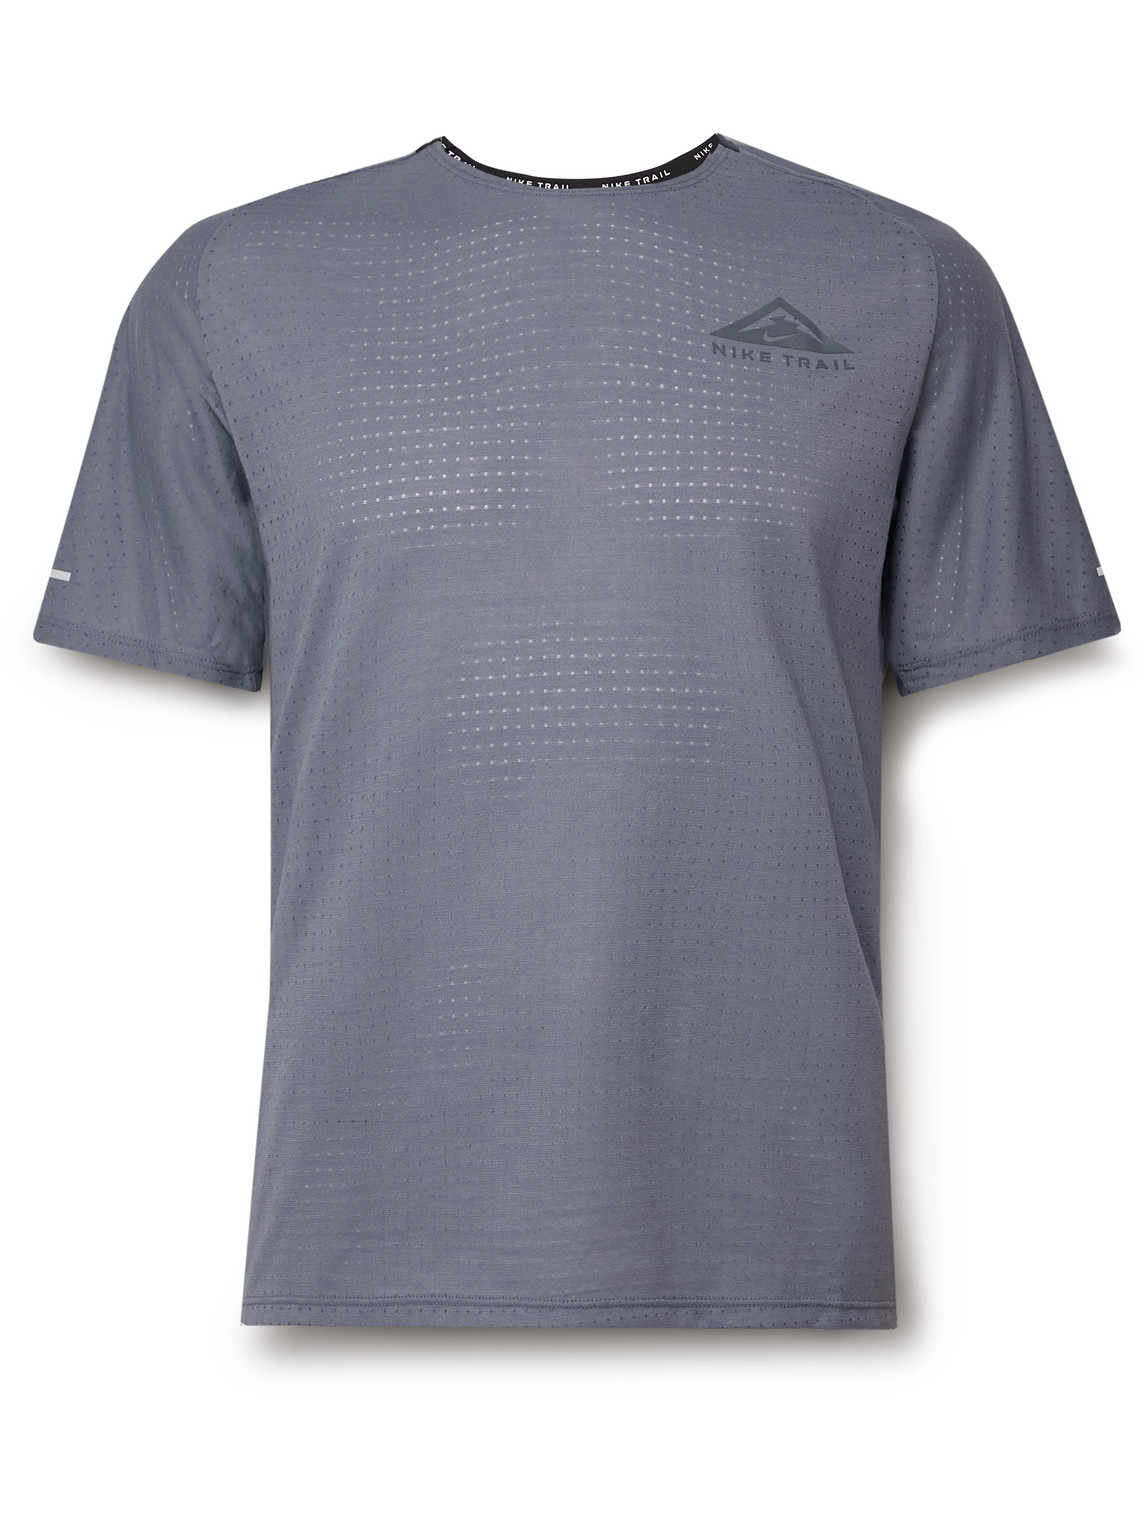 Nike Trail Solar Chase Dri-fit Mesh T-shirt In Gray